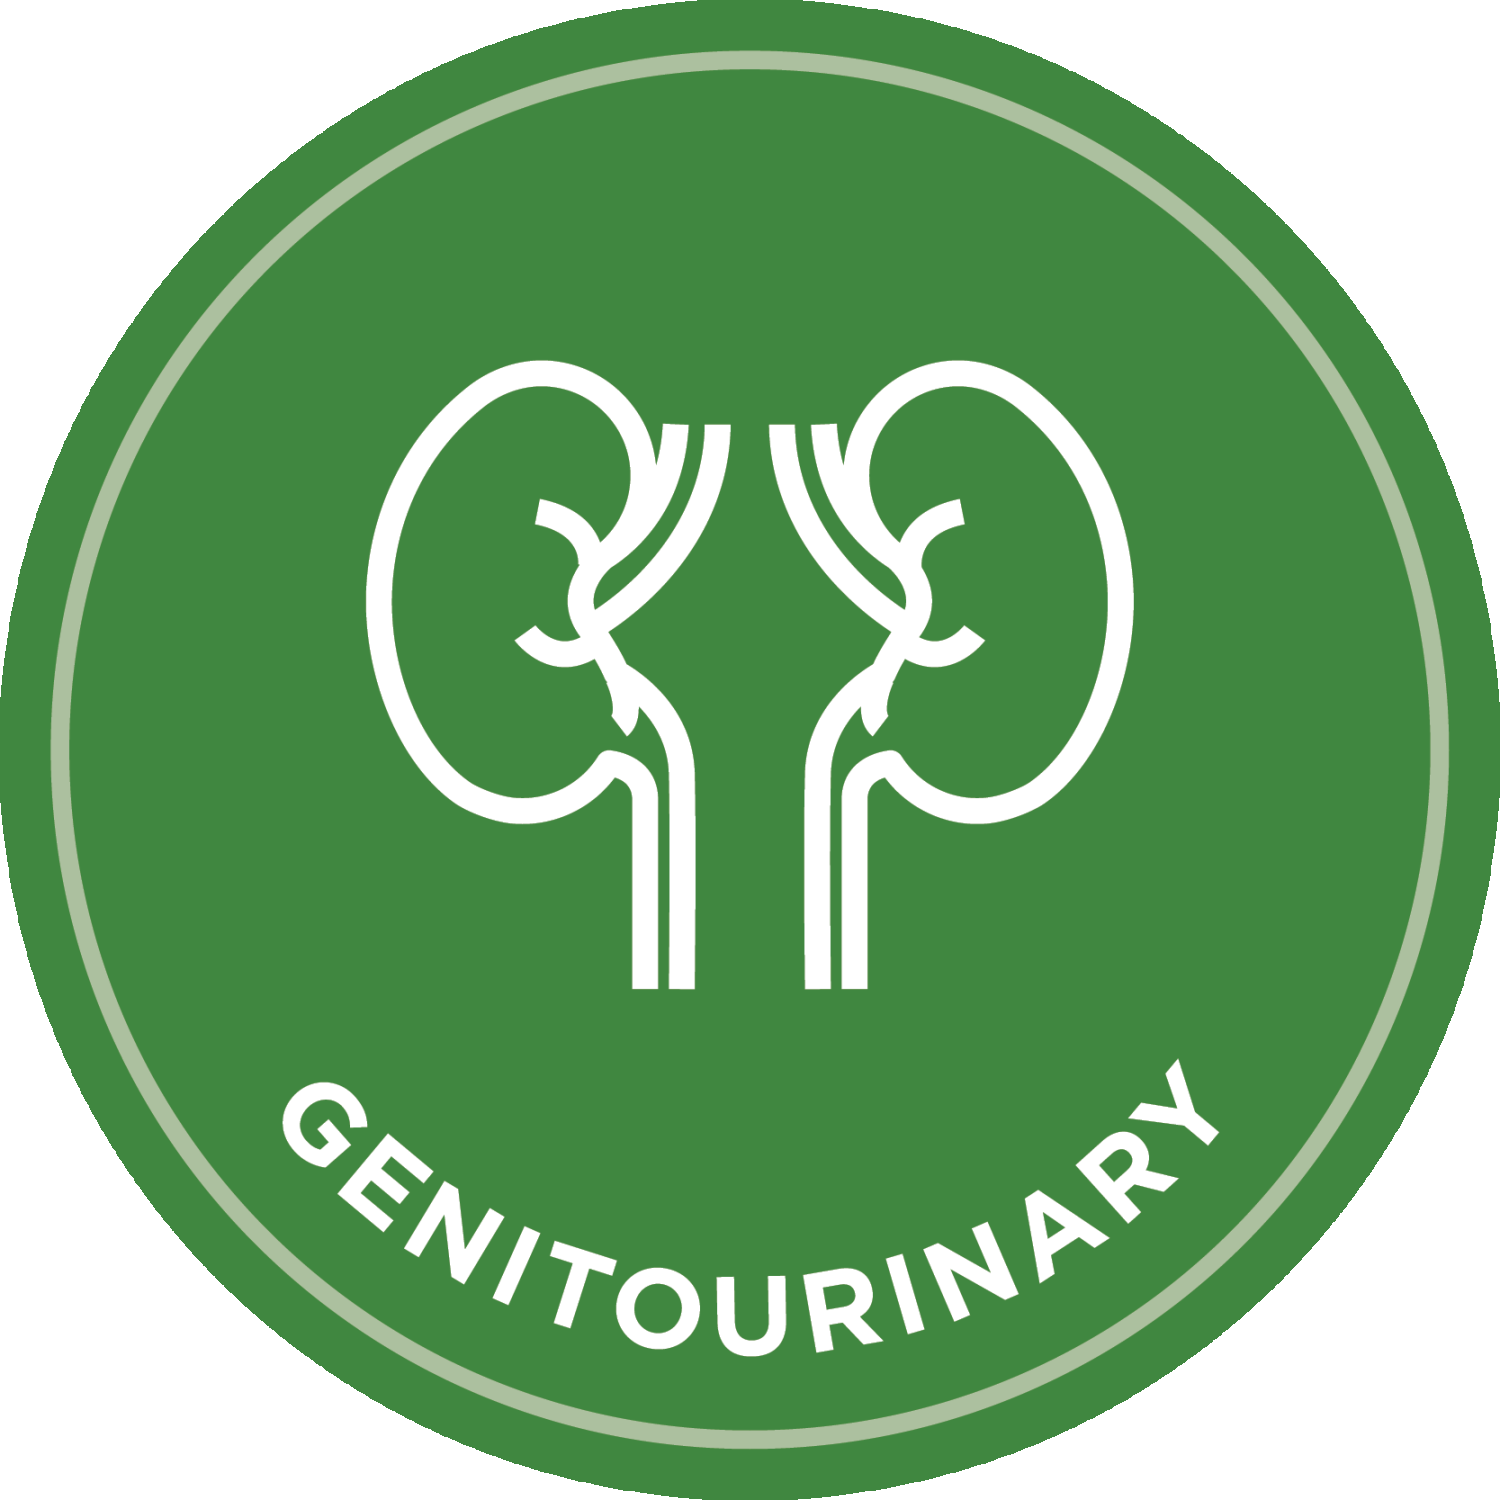 Genitourinary